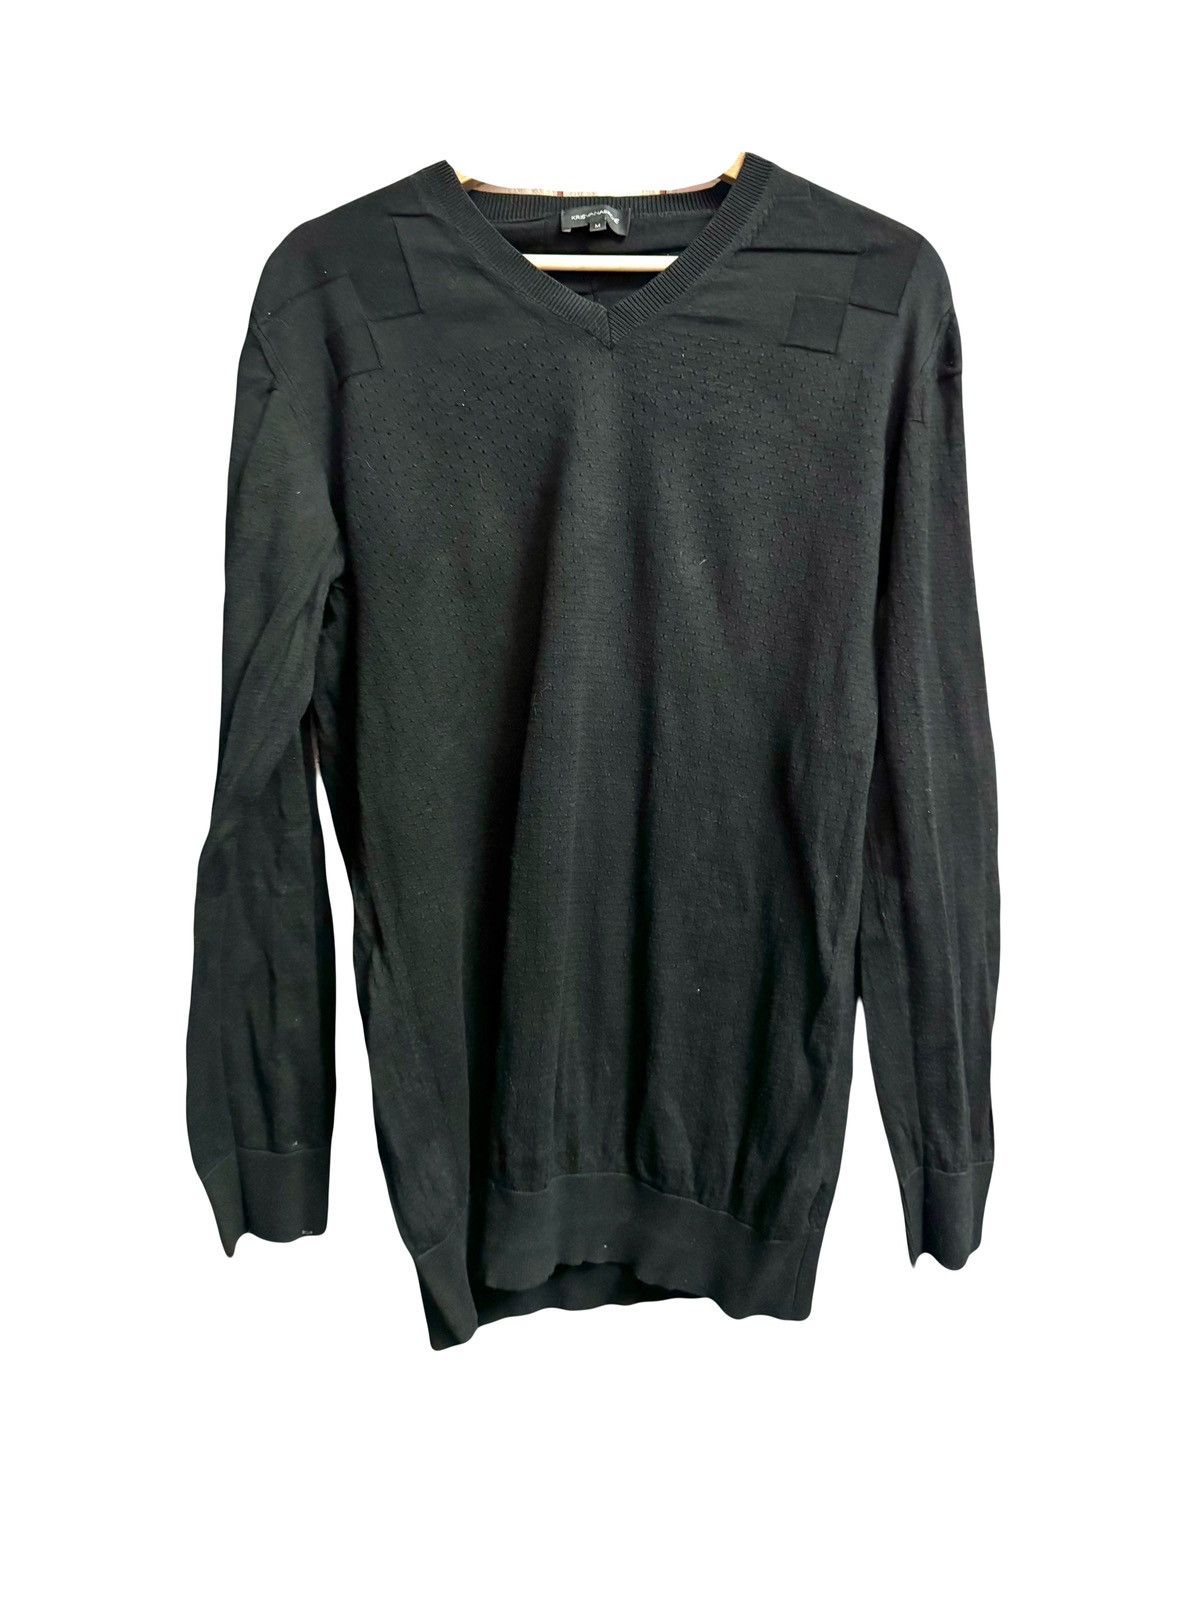 Kris Van Assche kris van assche black cotton knit sweater M | Grailed